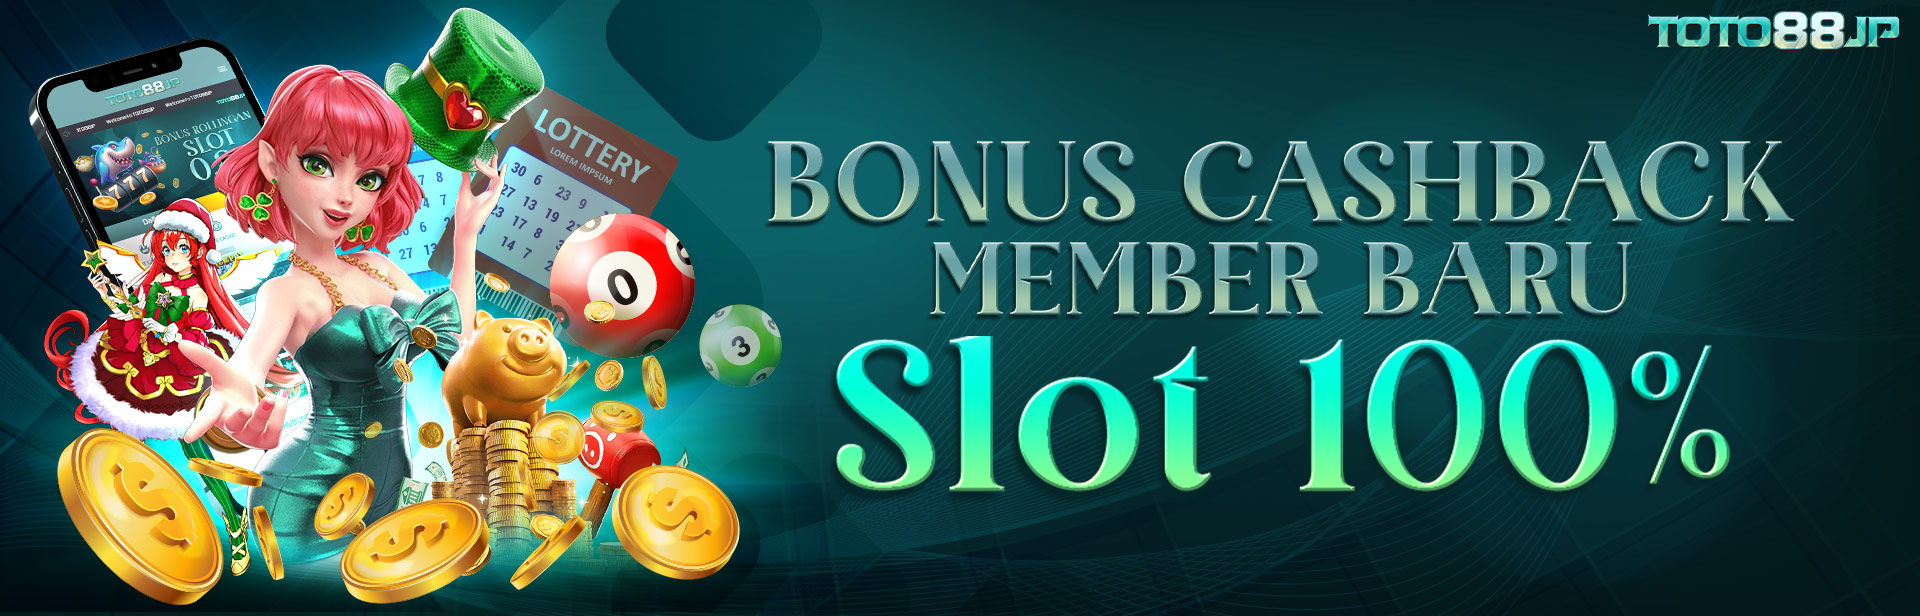 Bonus Special Member Baru Cashback Slot 100%